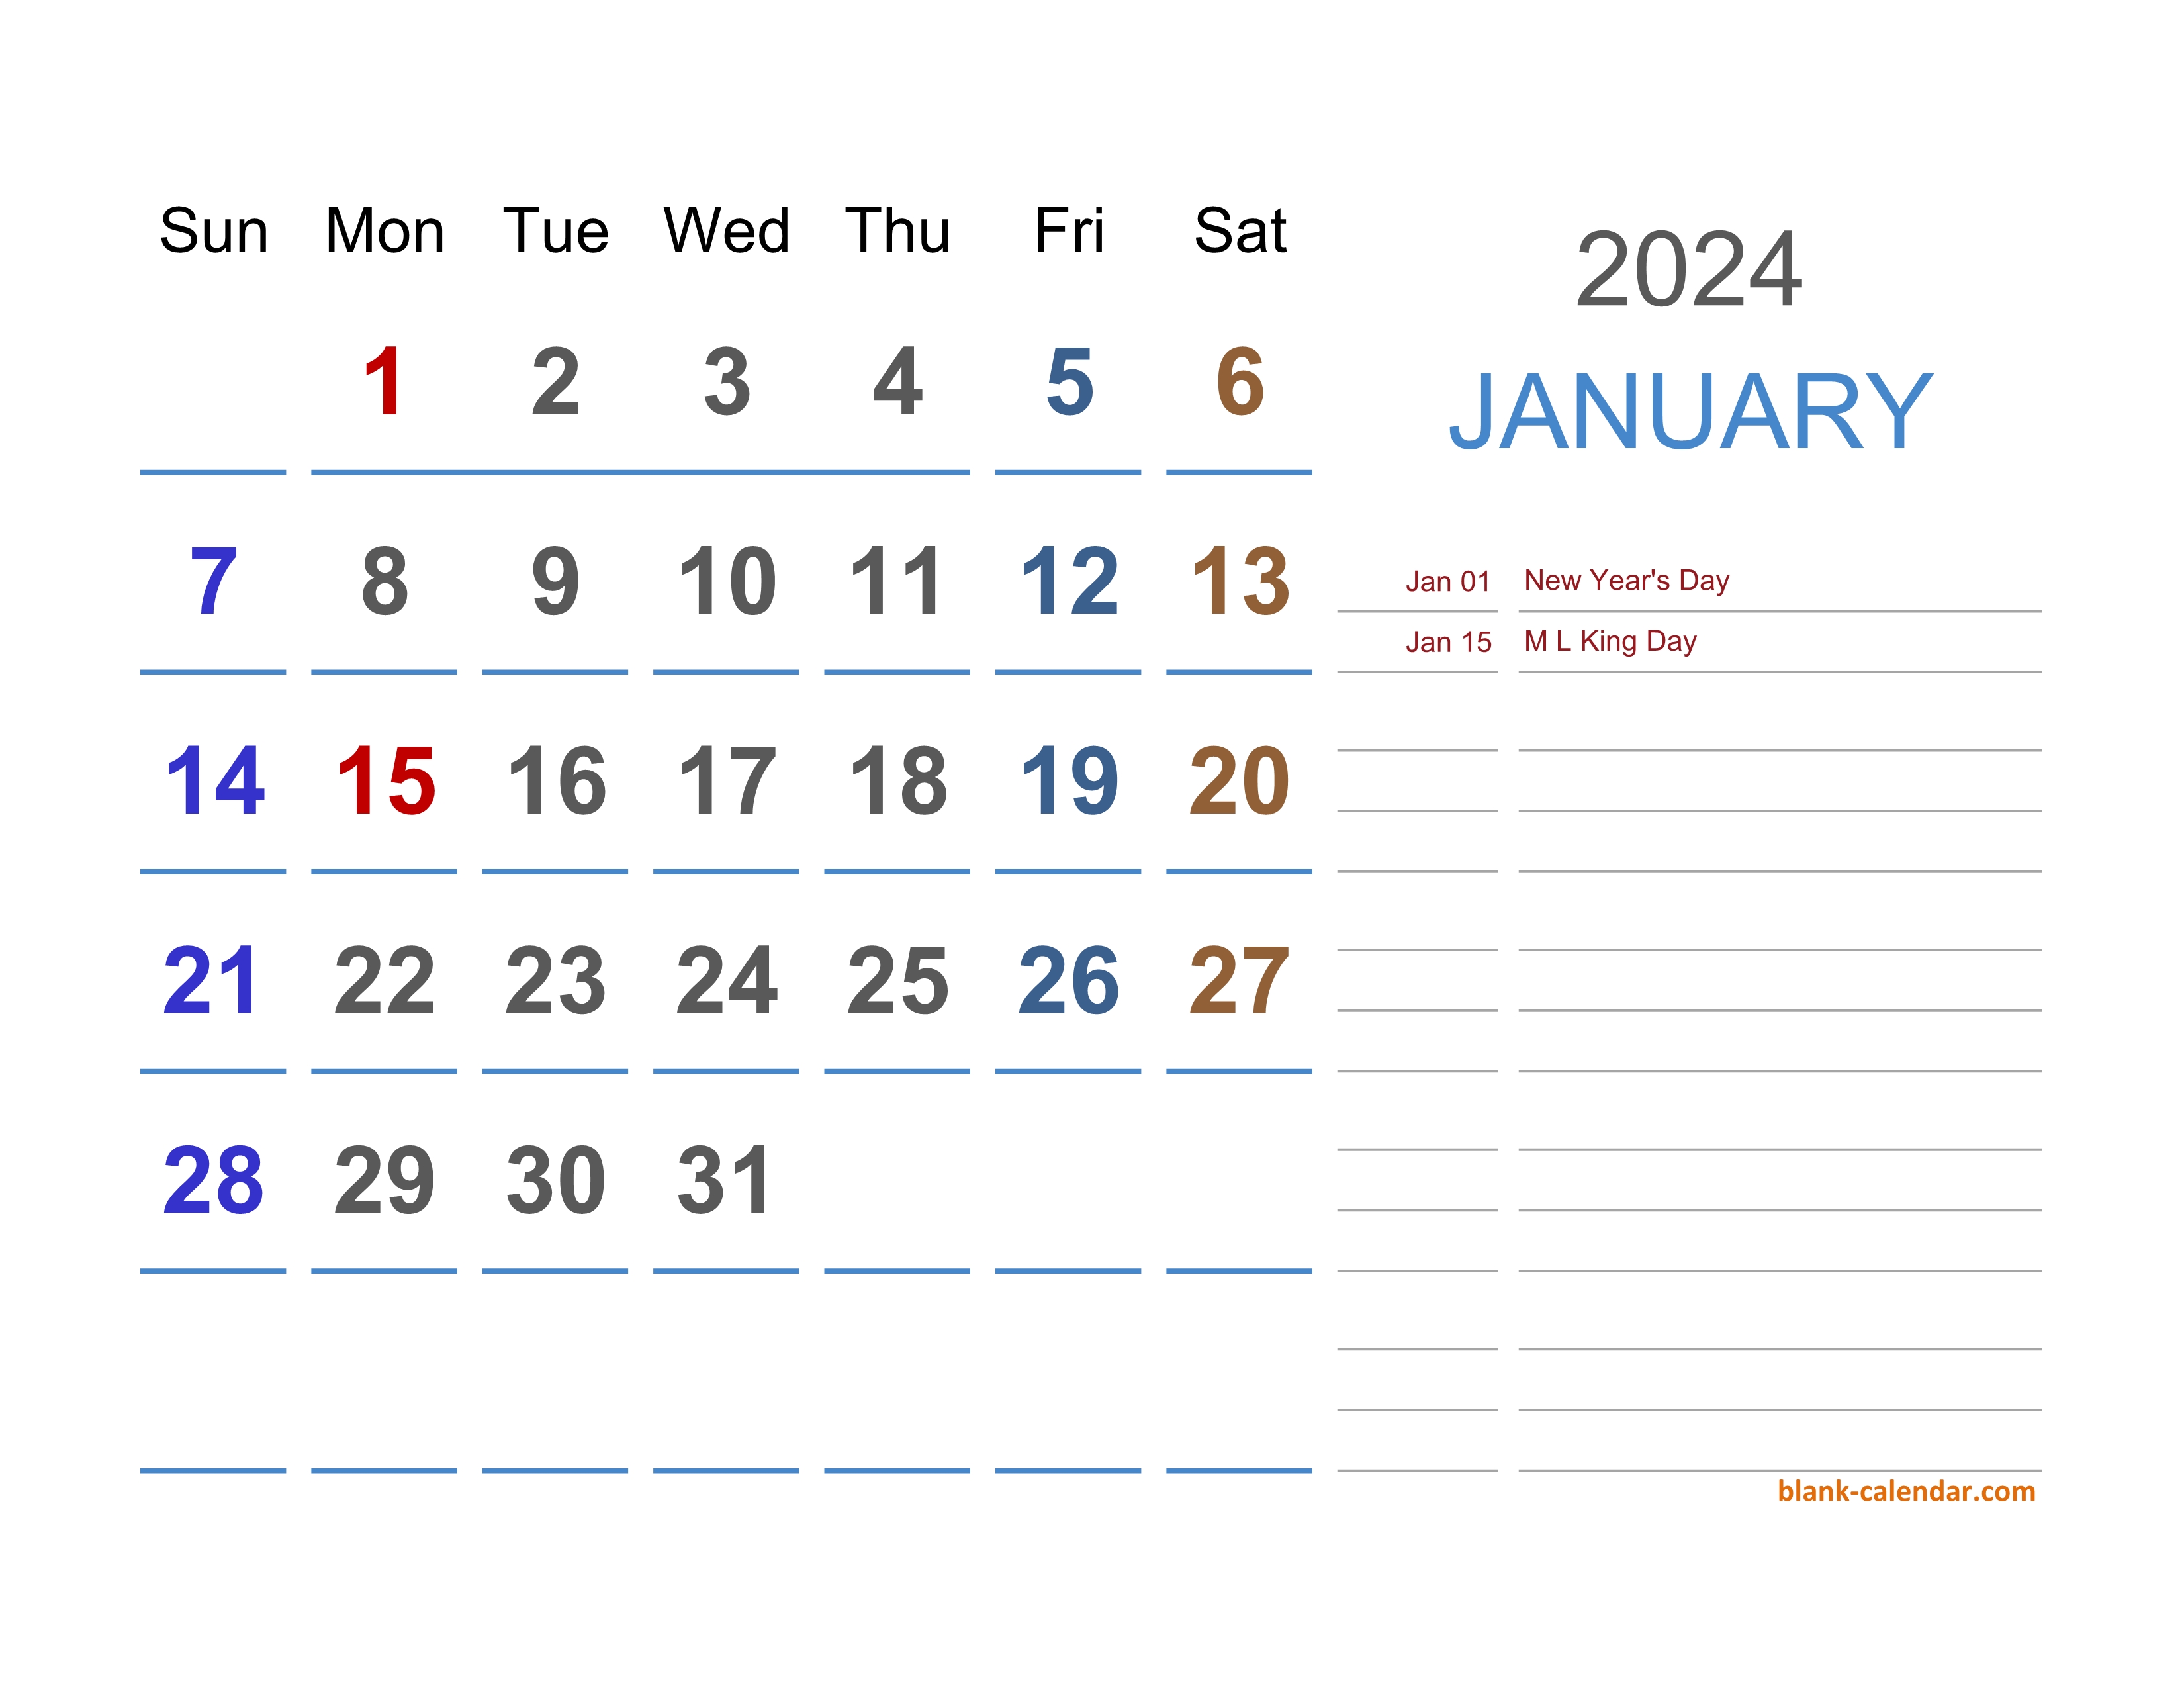 Магический календарь 2024. Календарь на 2024 год. Календарь календарь 2024. Календарь 2024 эксель. Календарь март 2024.